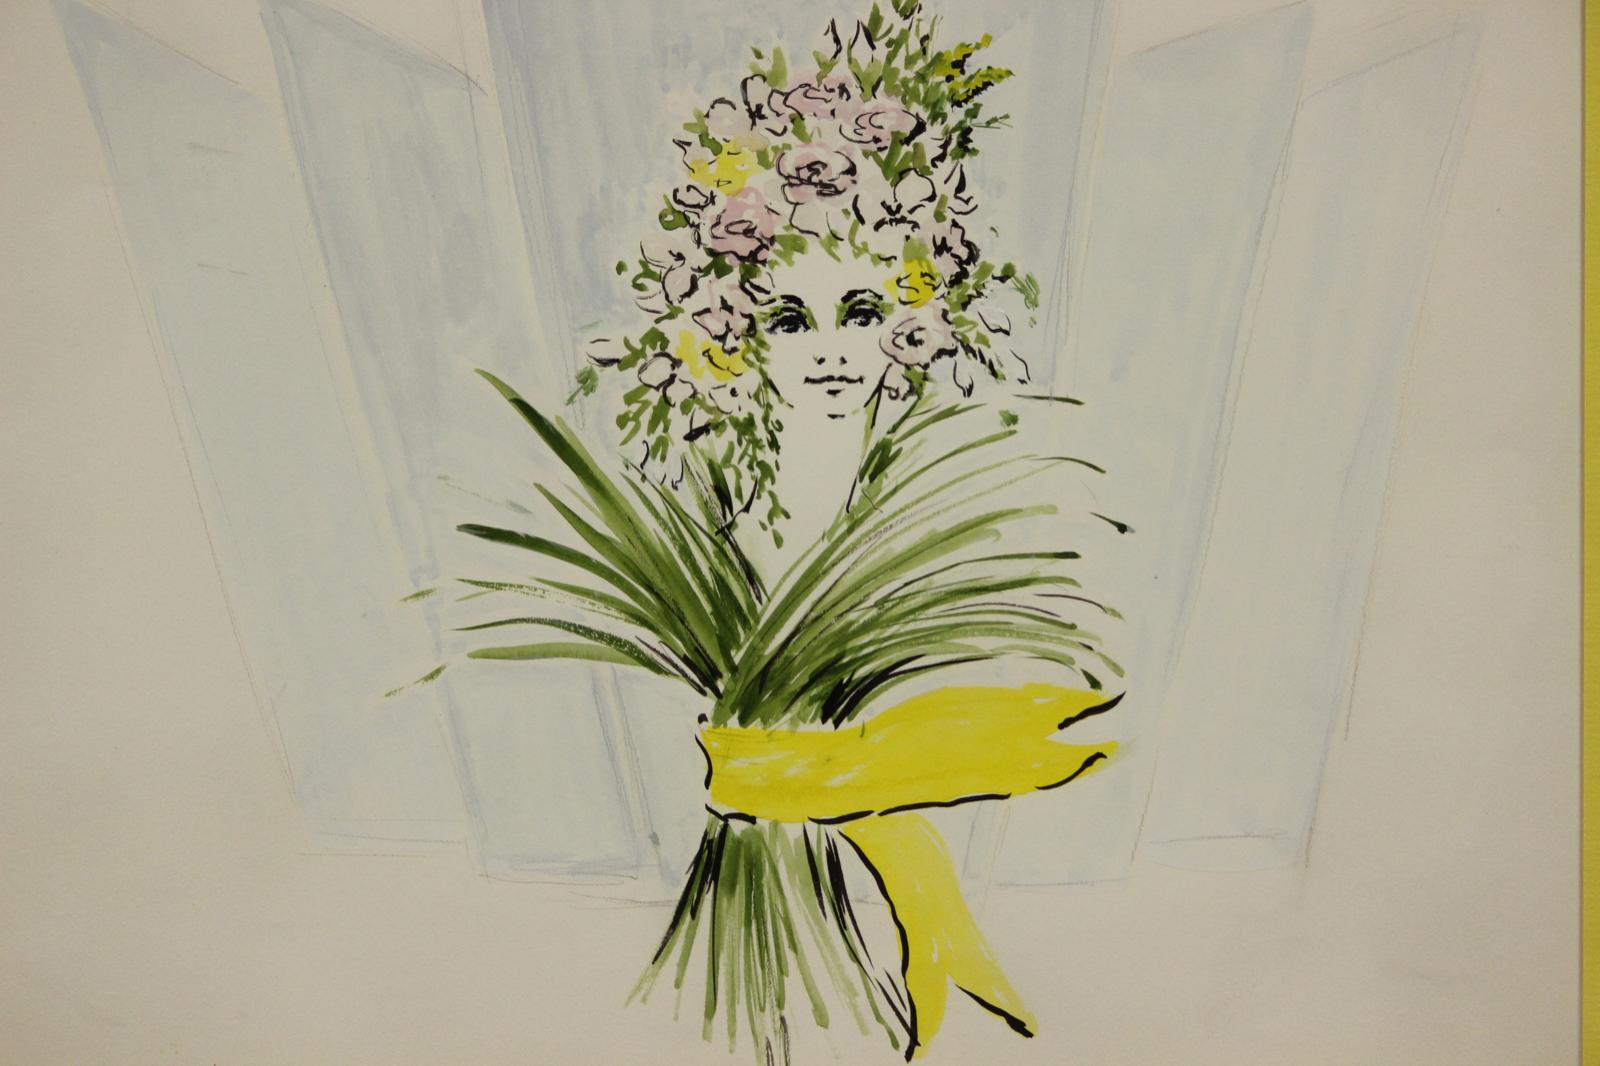 Lanvin Paris Advert Watercolour Chic Model in a Floral Headdress by A.W. Montel  For Sale 1